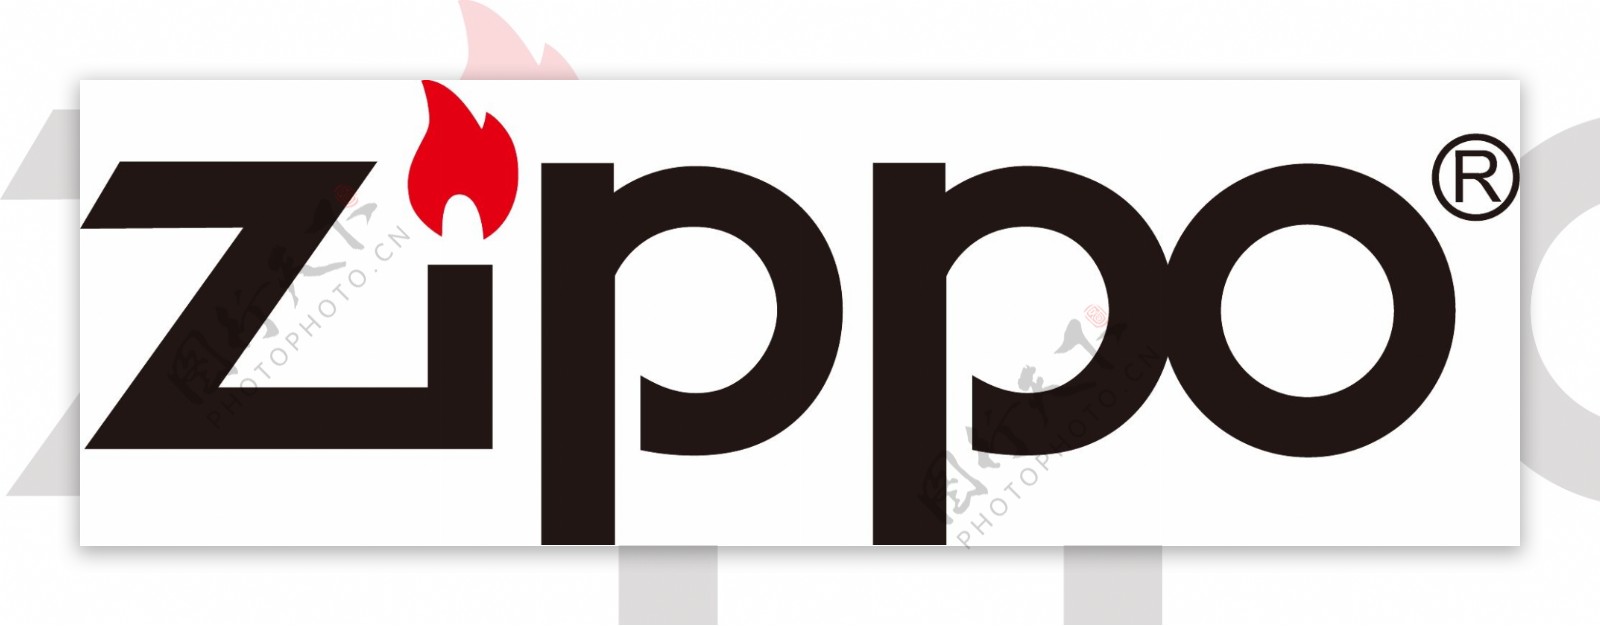 zippo打火机logo图片